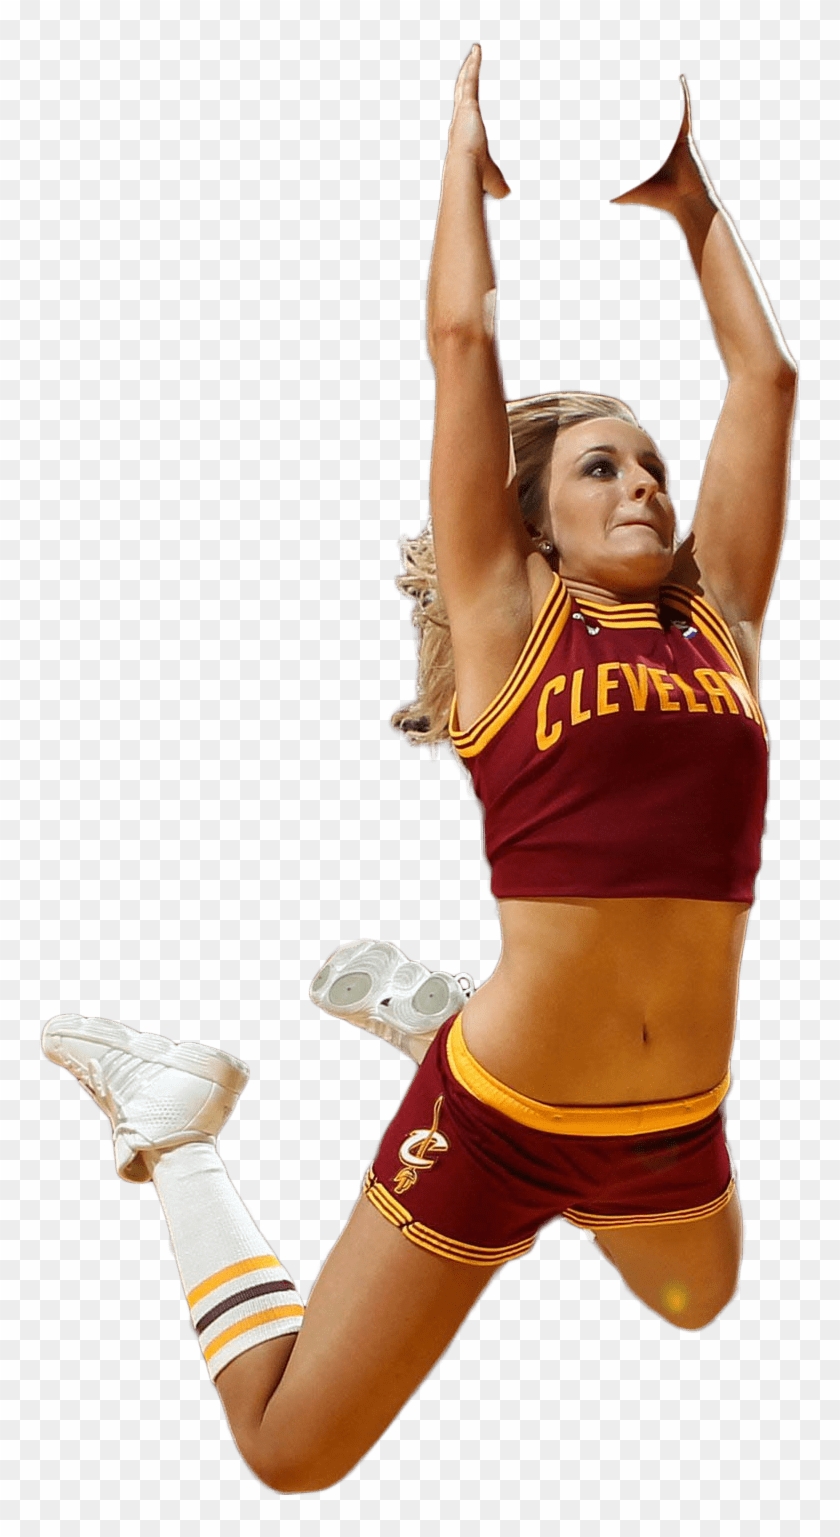 Cleveland Cheerleader - Cheerleader Png Clipart #1381258